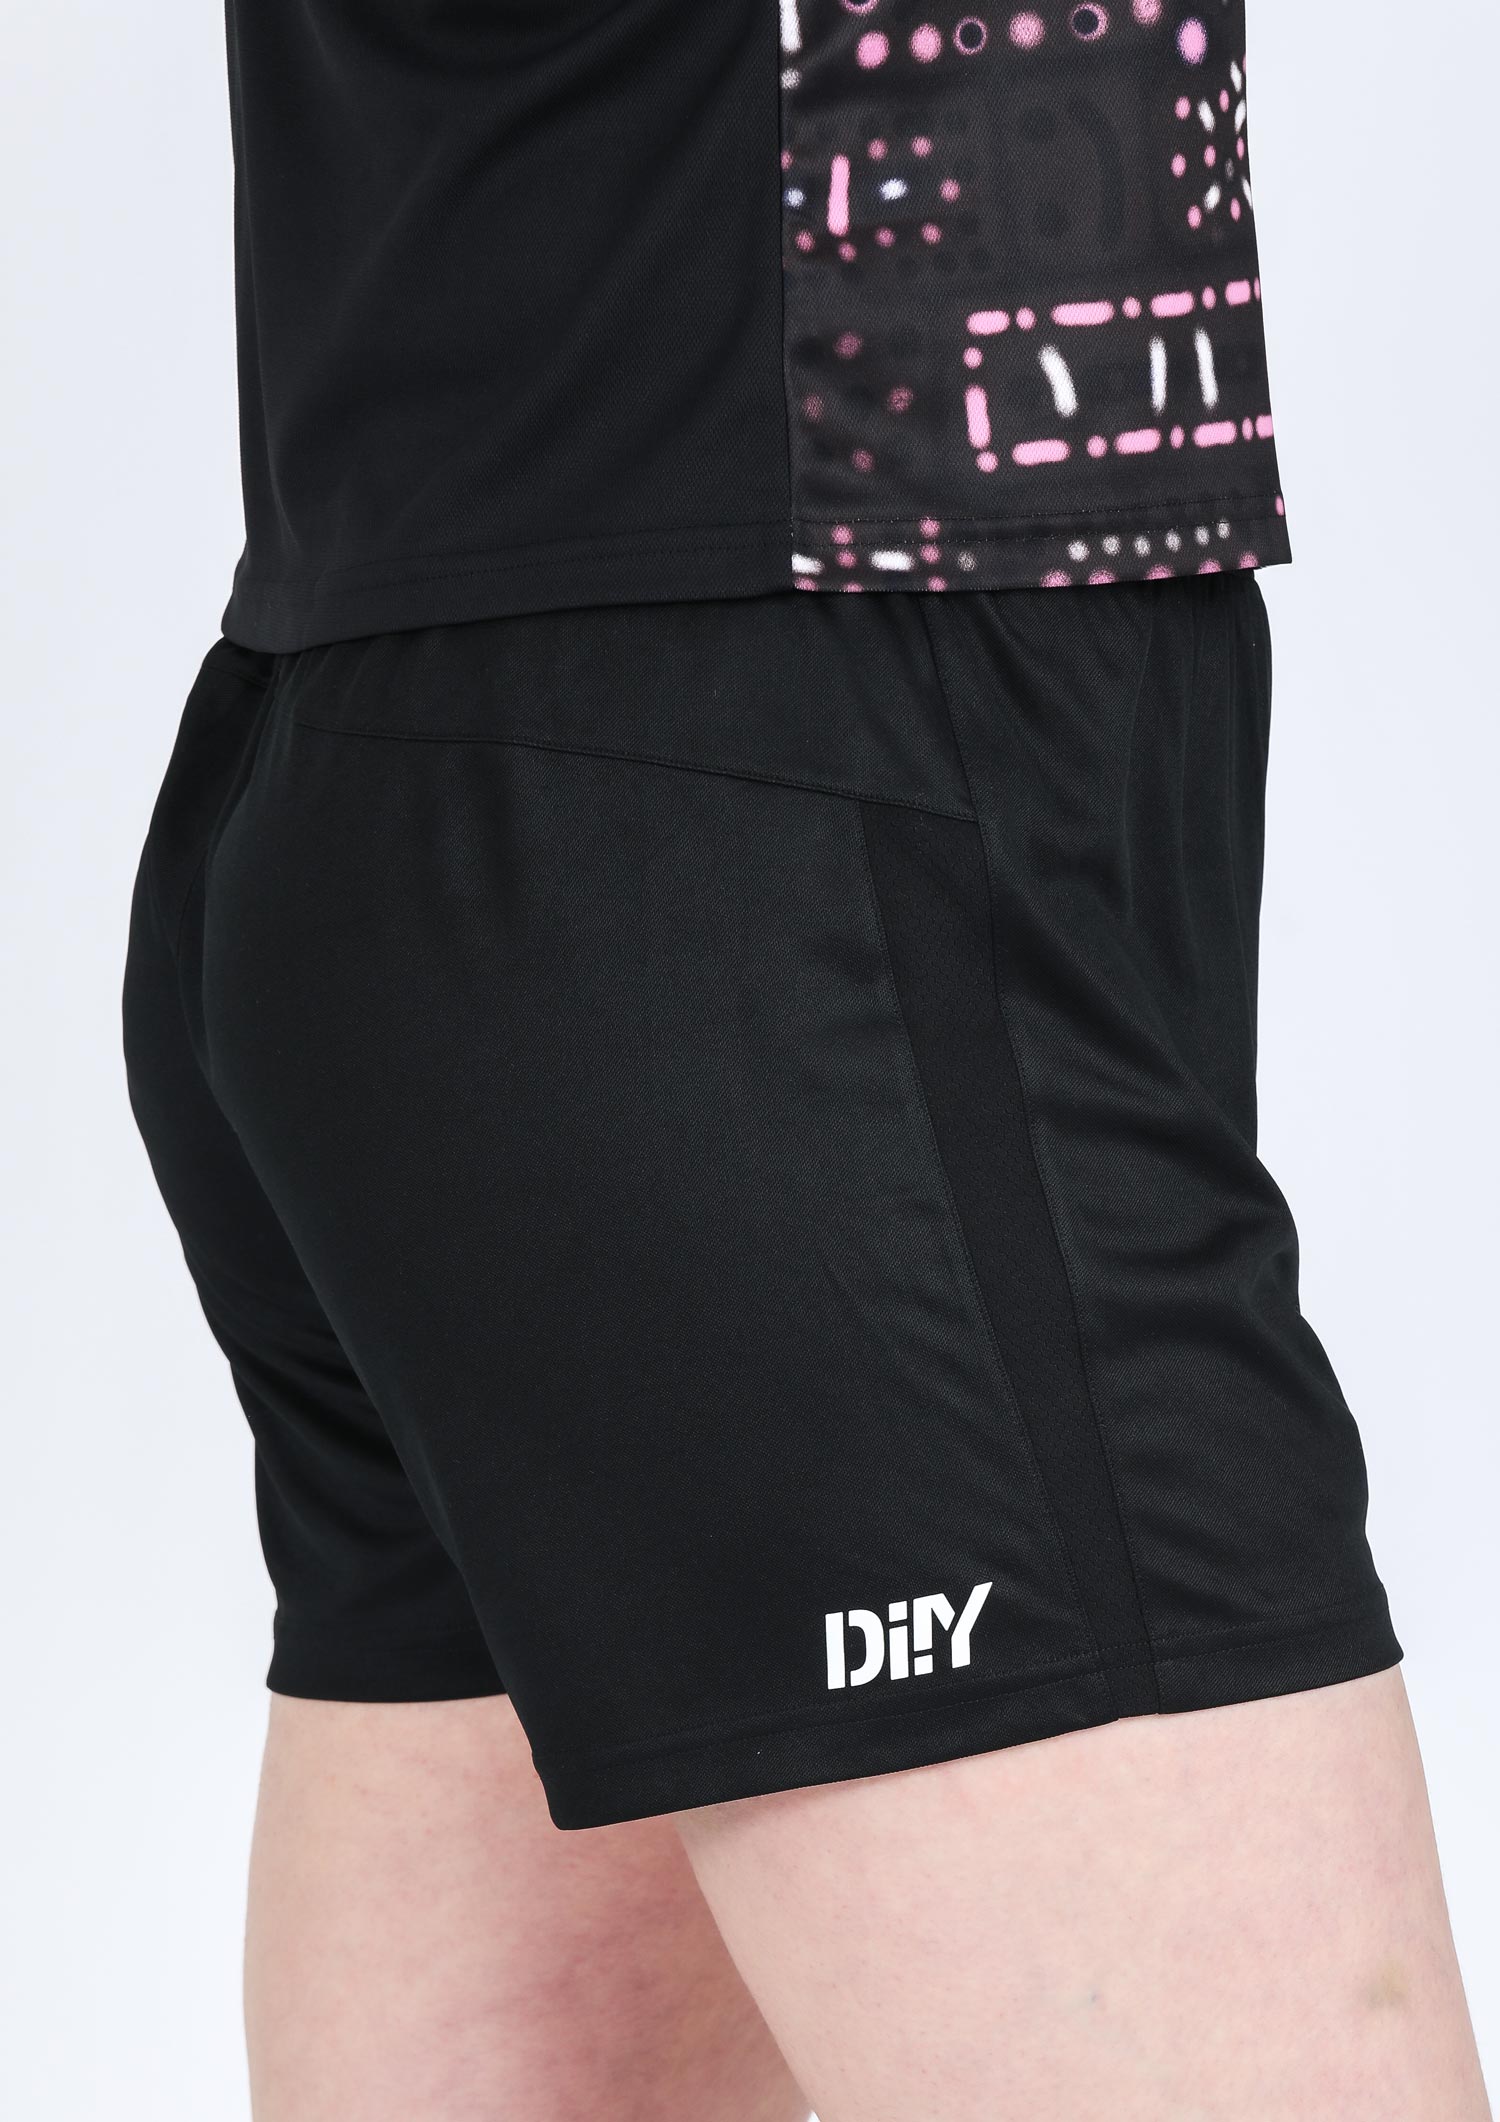 DIIY - Shorts Third Short 2022-23